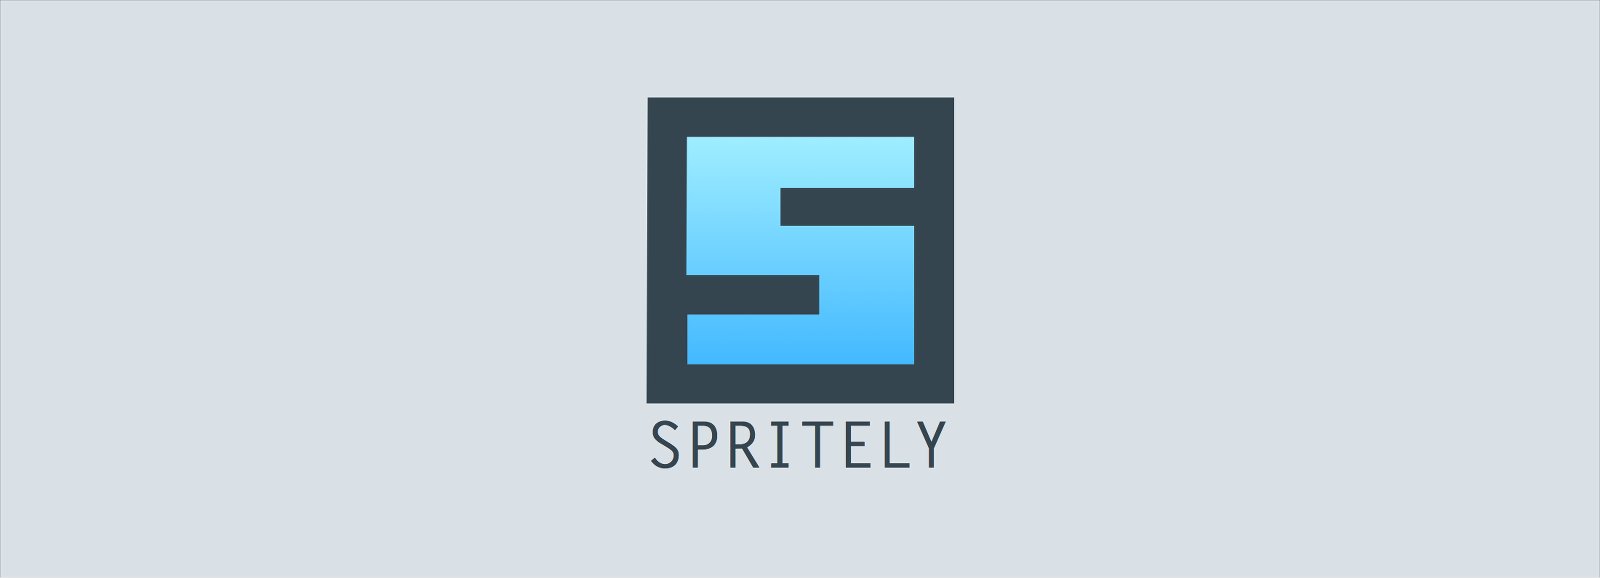 Spritely Games Logo - Large